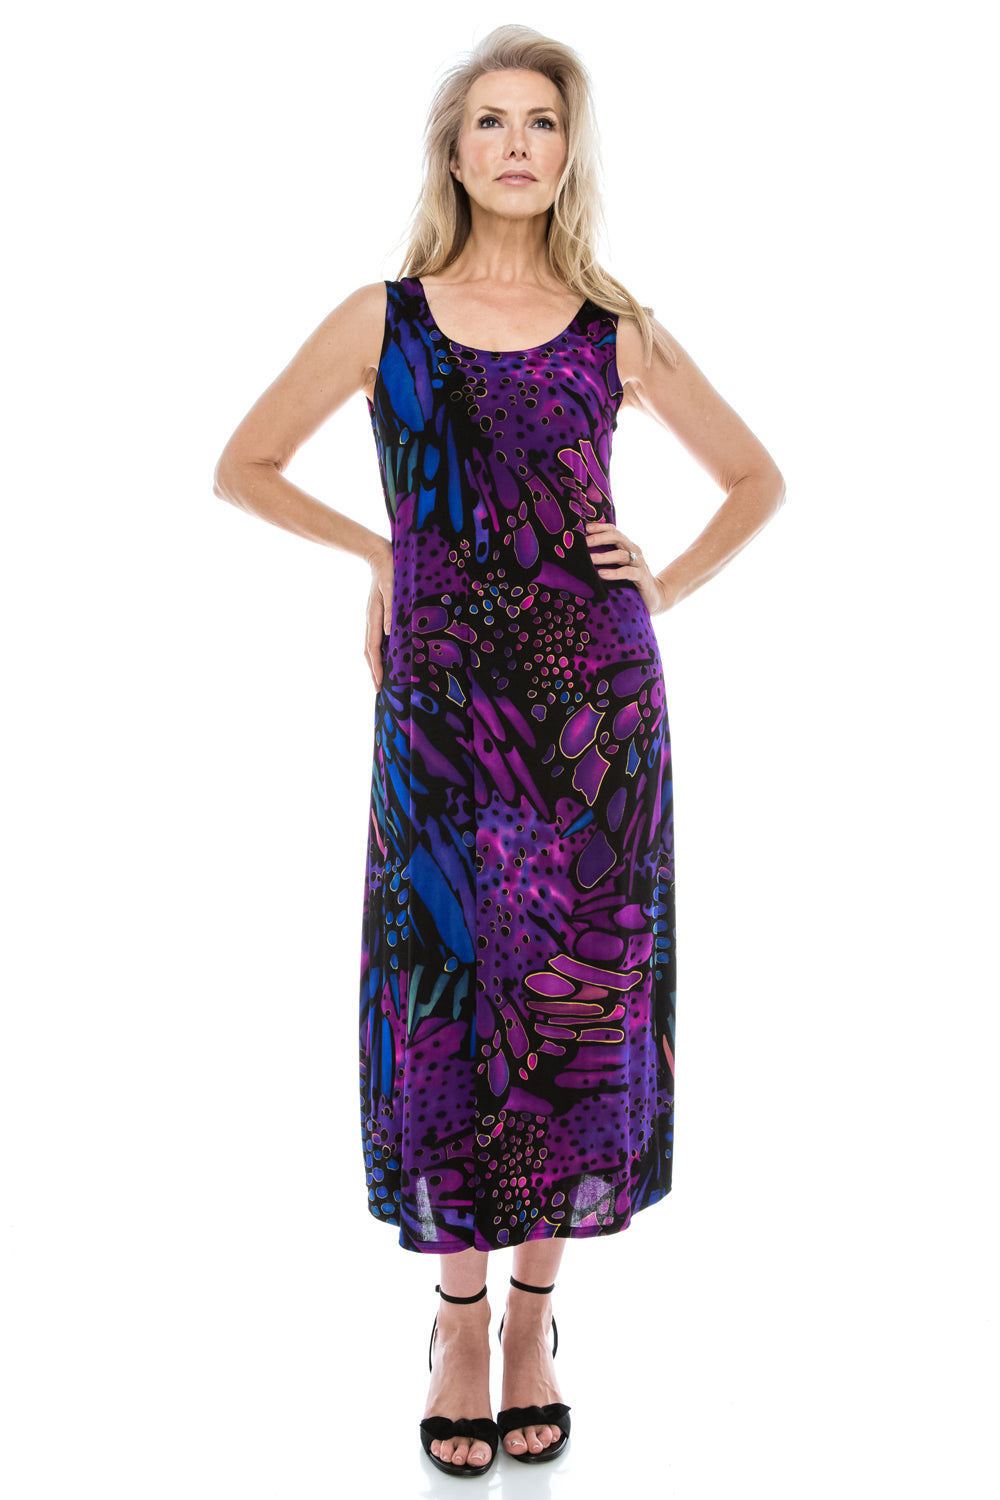 Jostar Women's Stretchy Long Tank Dress Print, 700BN-TP-W207 - Jostar Online